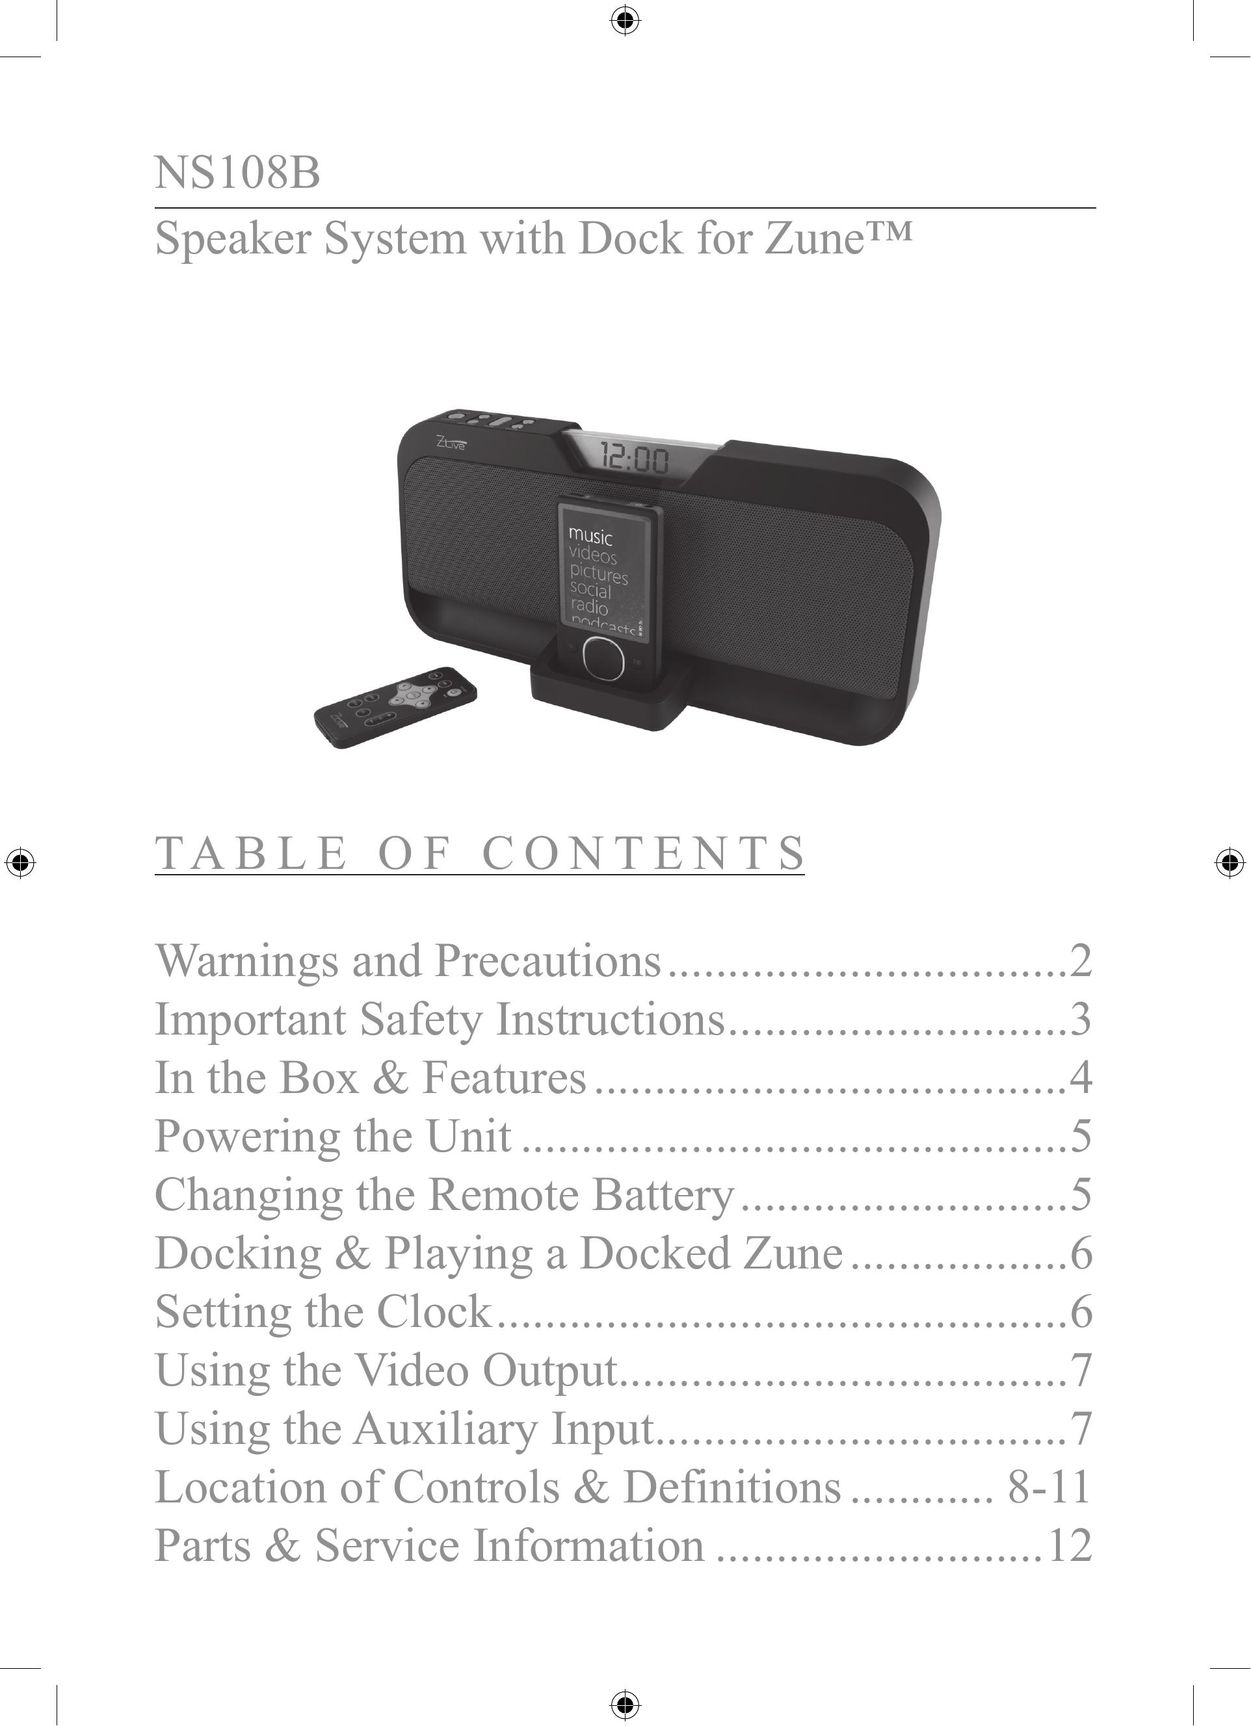 iLive NS108B Speaker System User Manual